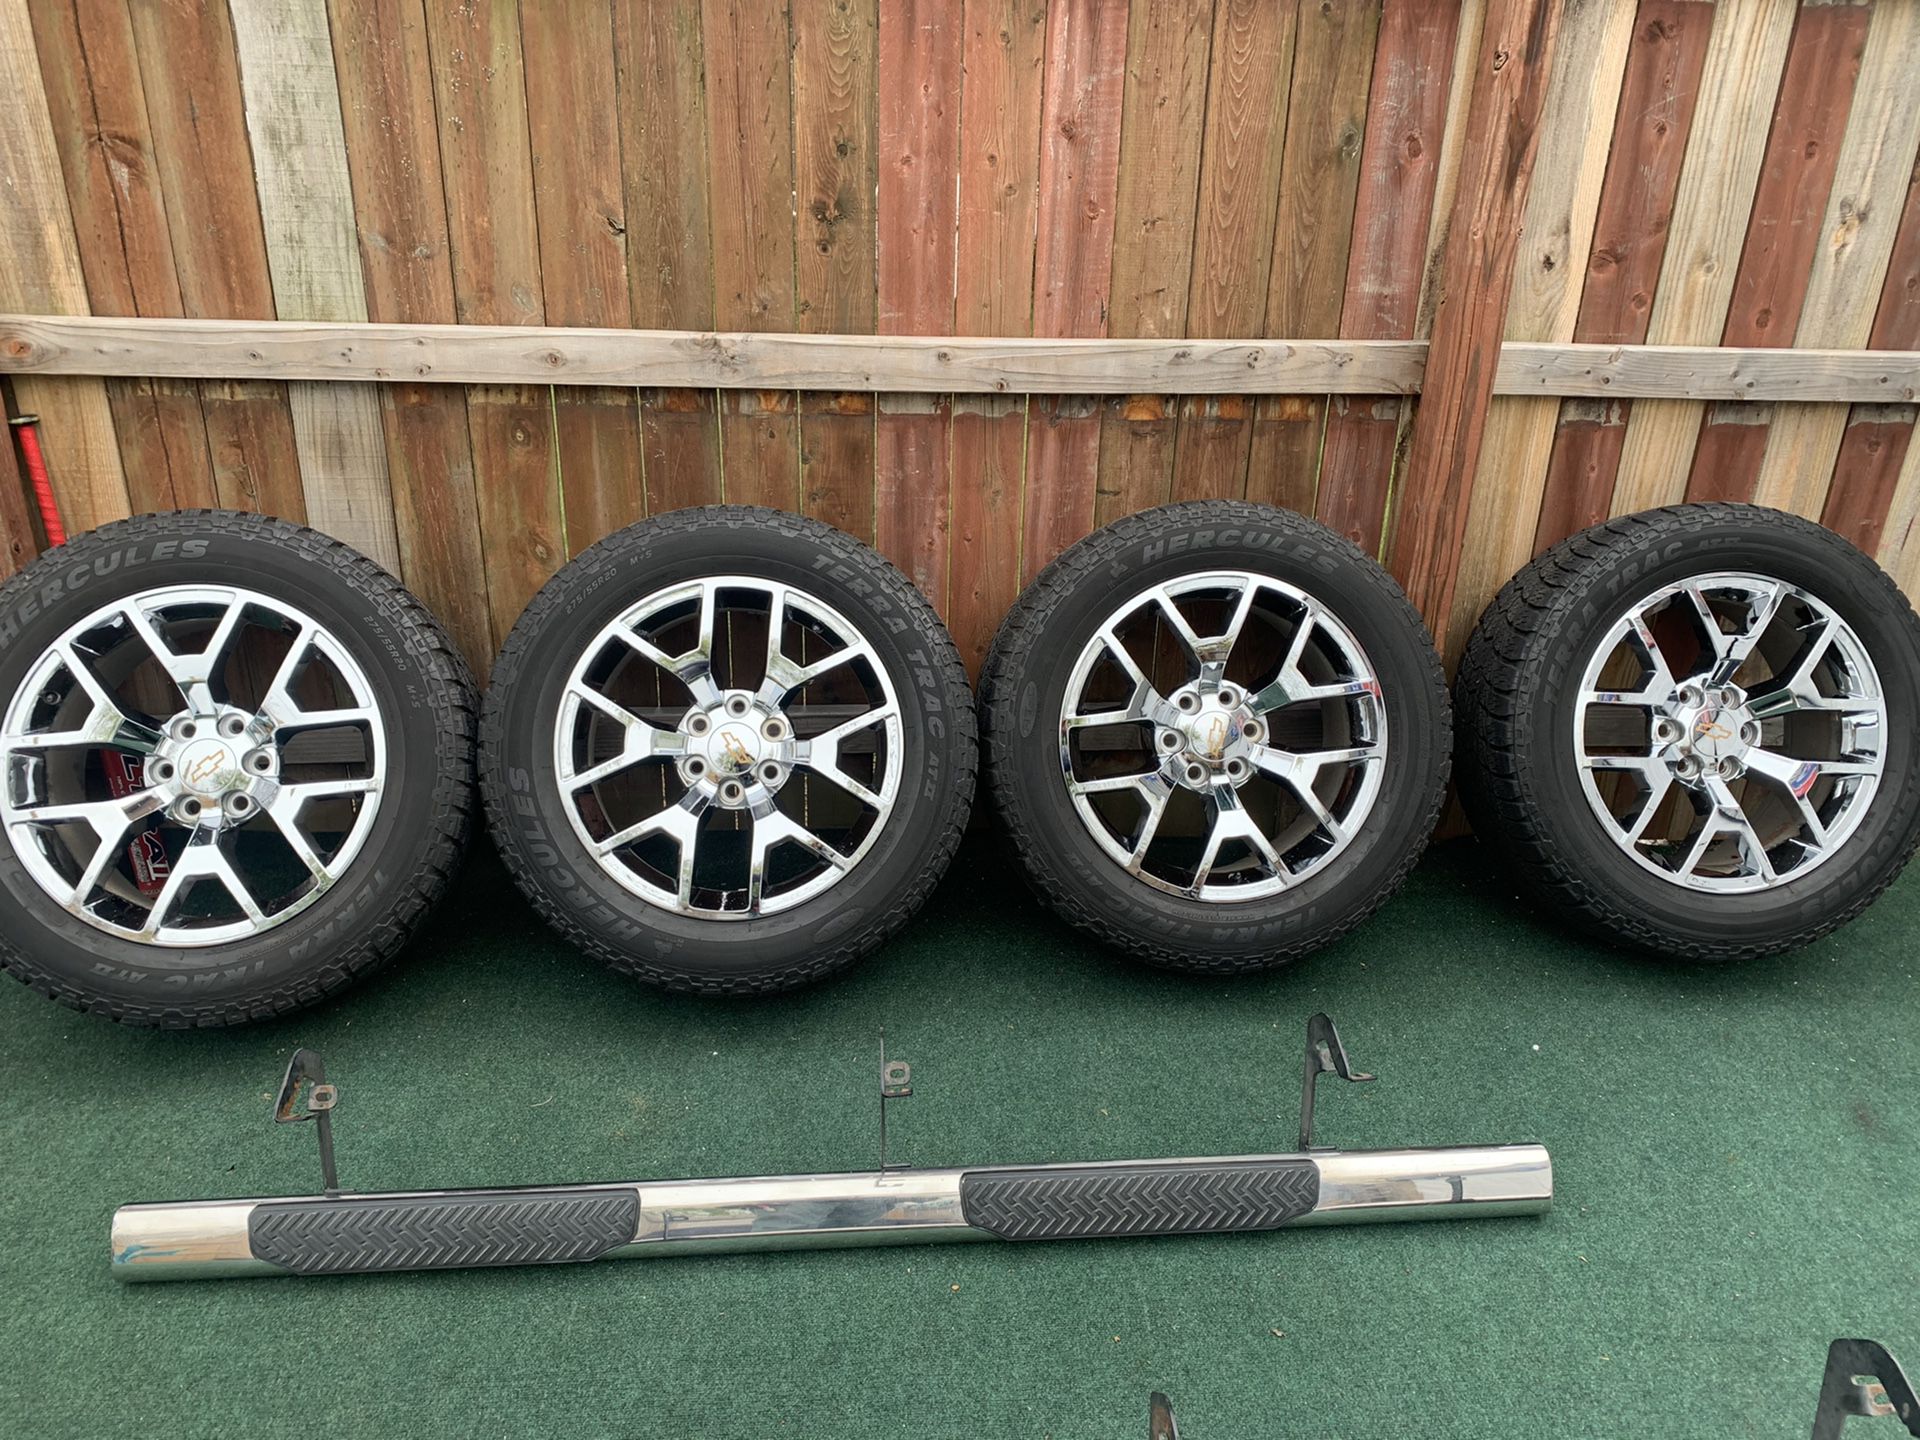 20” (6 lug) rims with tires for Chevy Silverado $1000